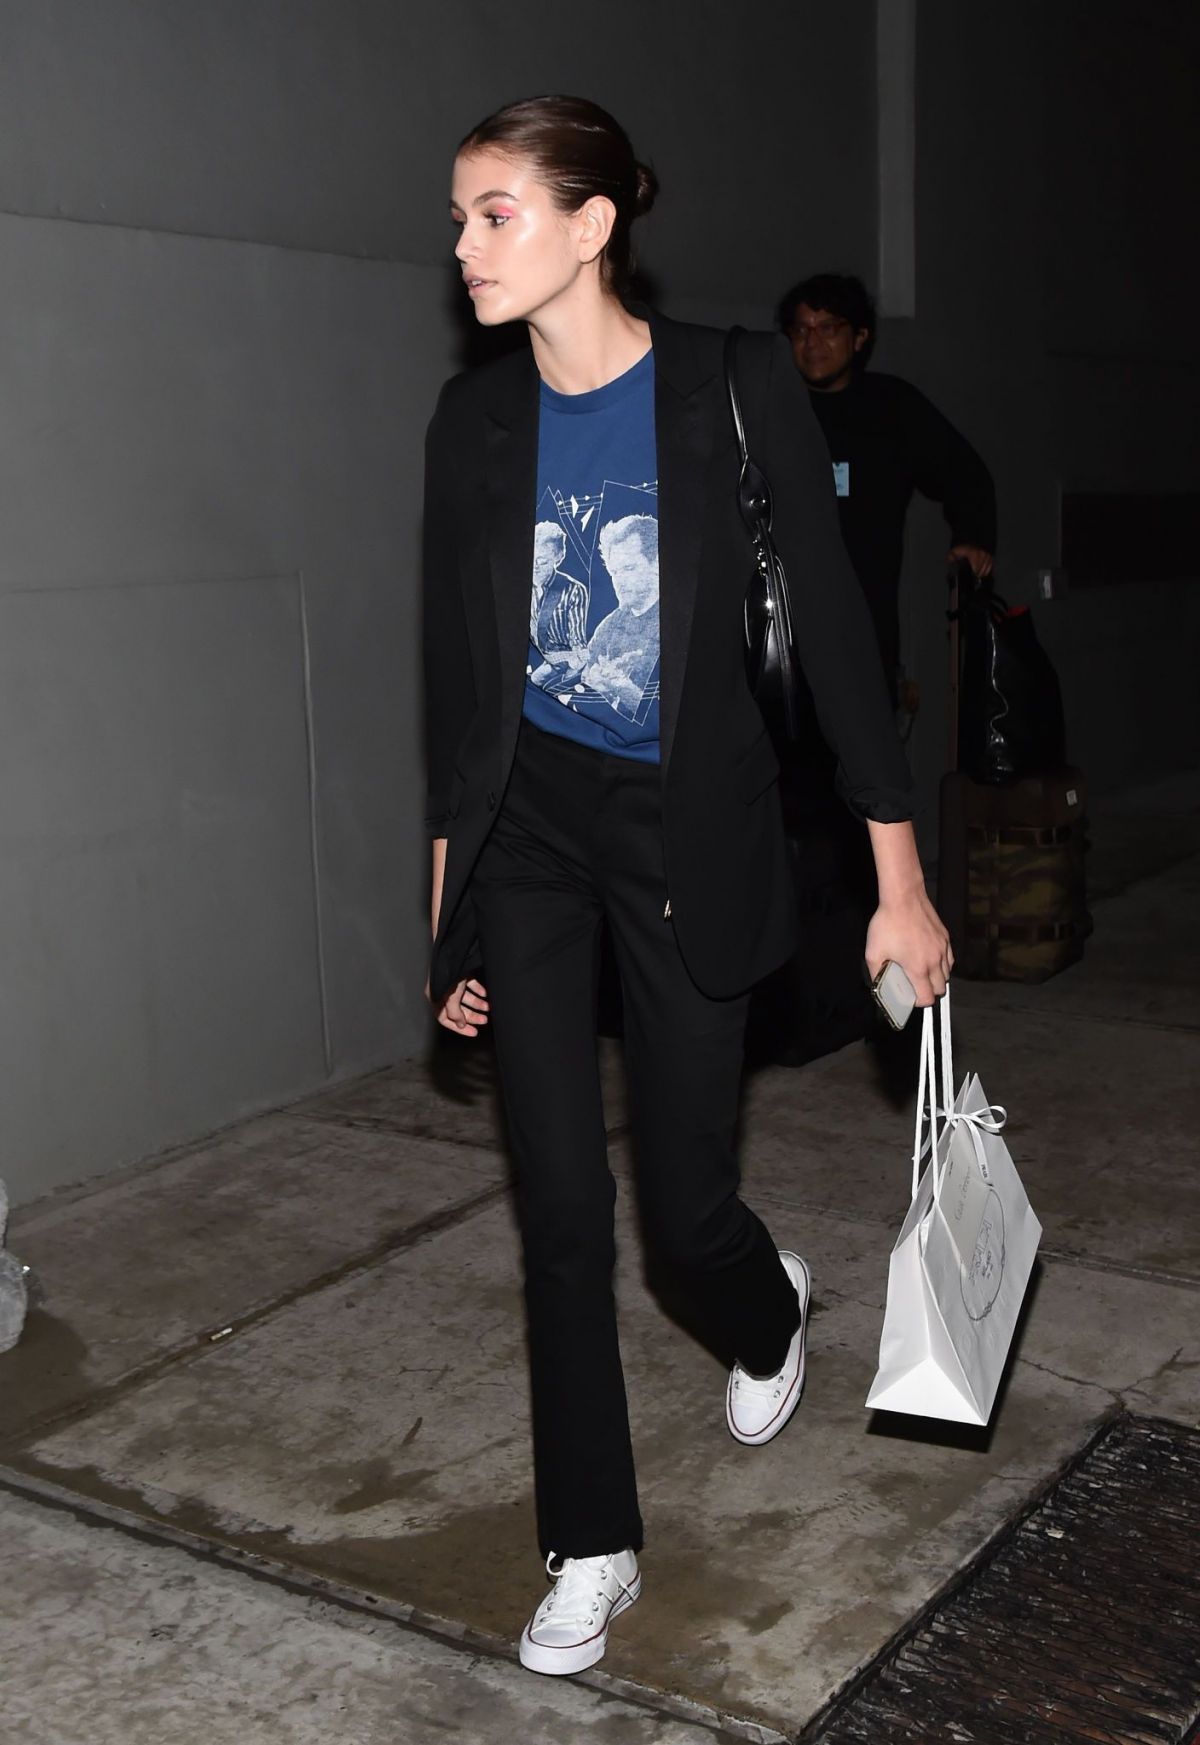 KAIA GERBER Leaves Prada Fashion Show in New York 05/02/2019 – HawtCelebs